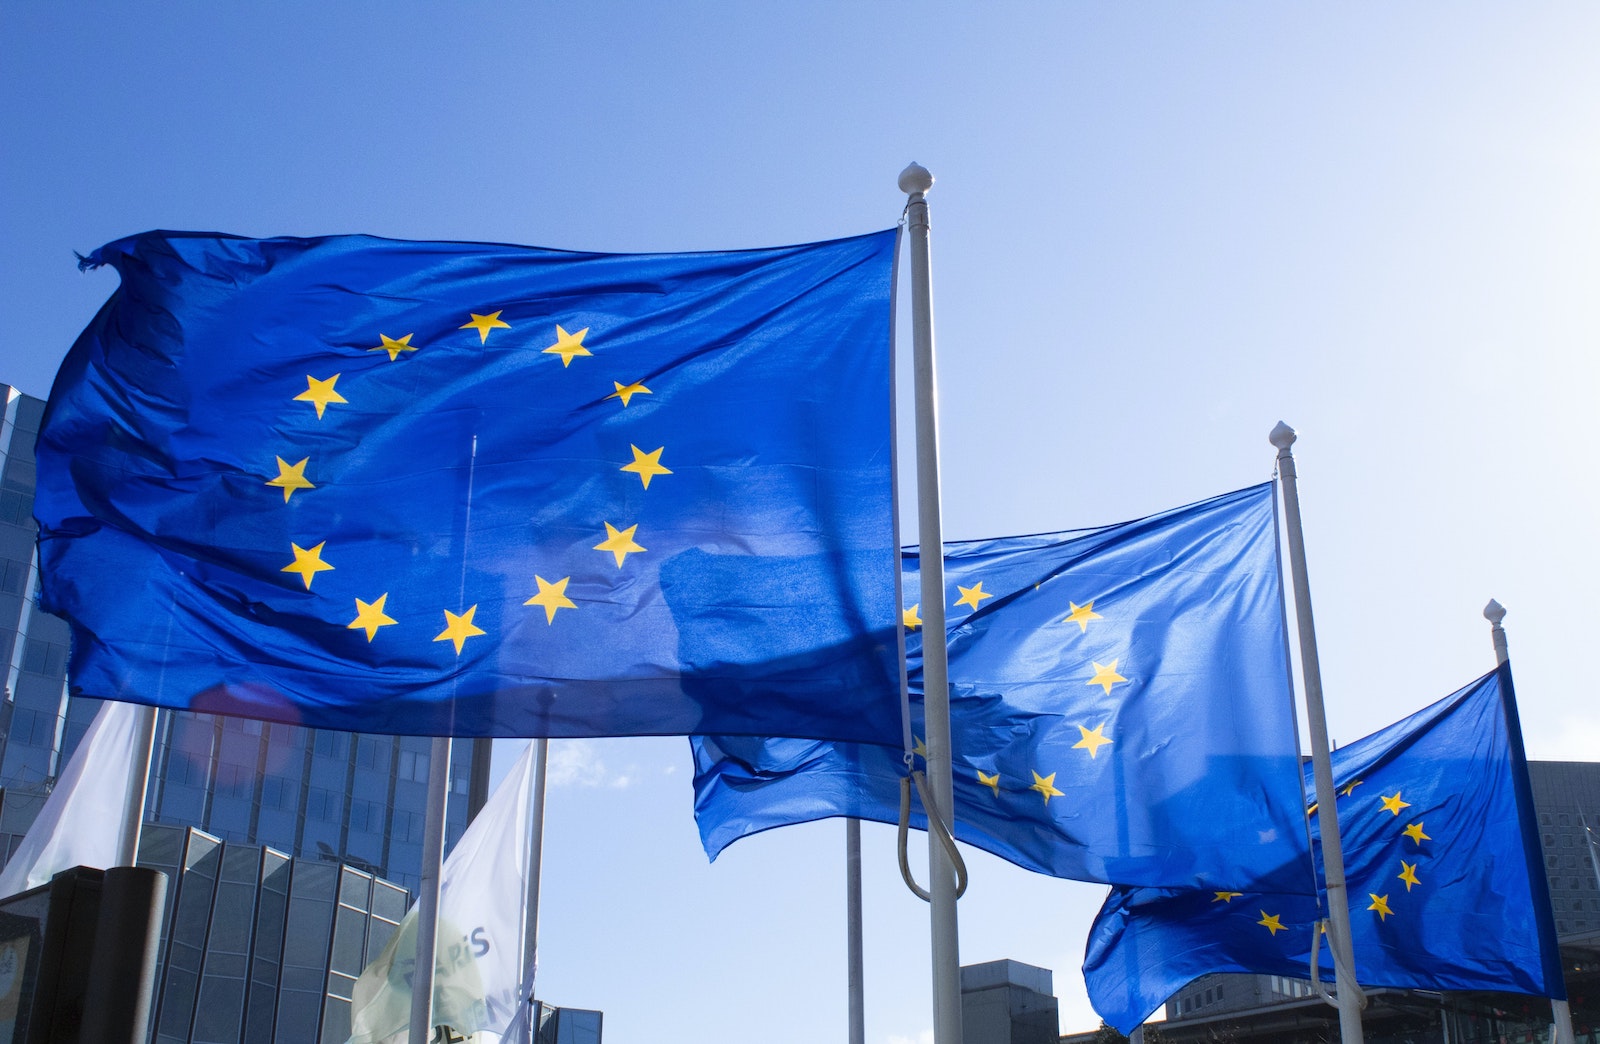 Open letter to the European Union